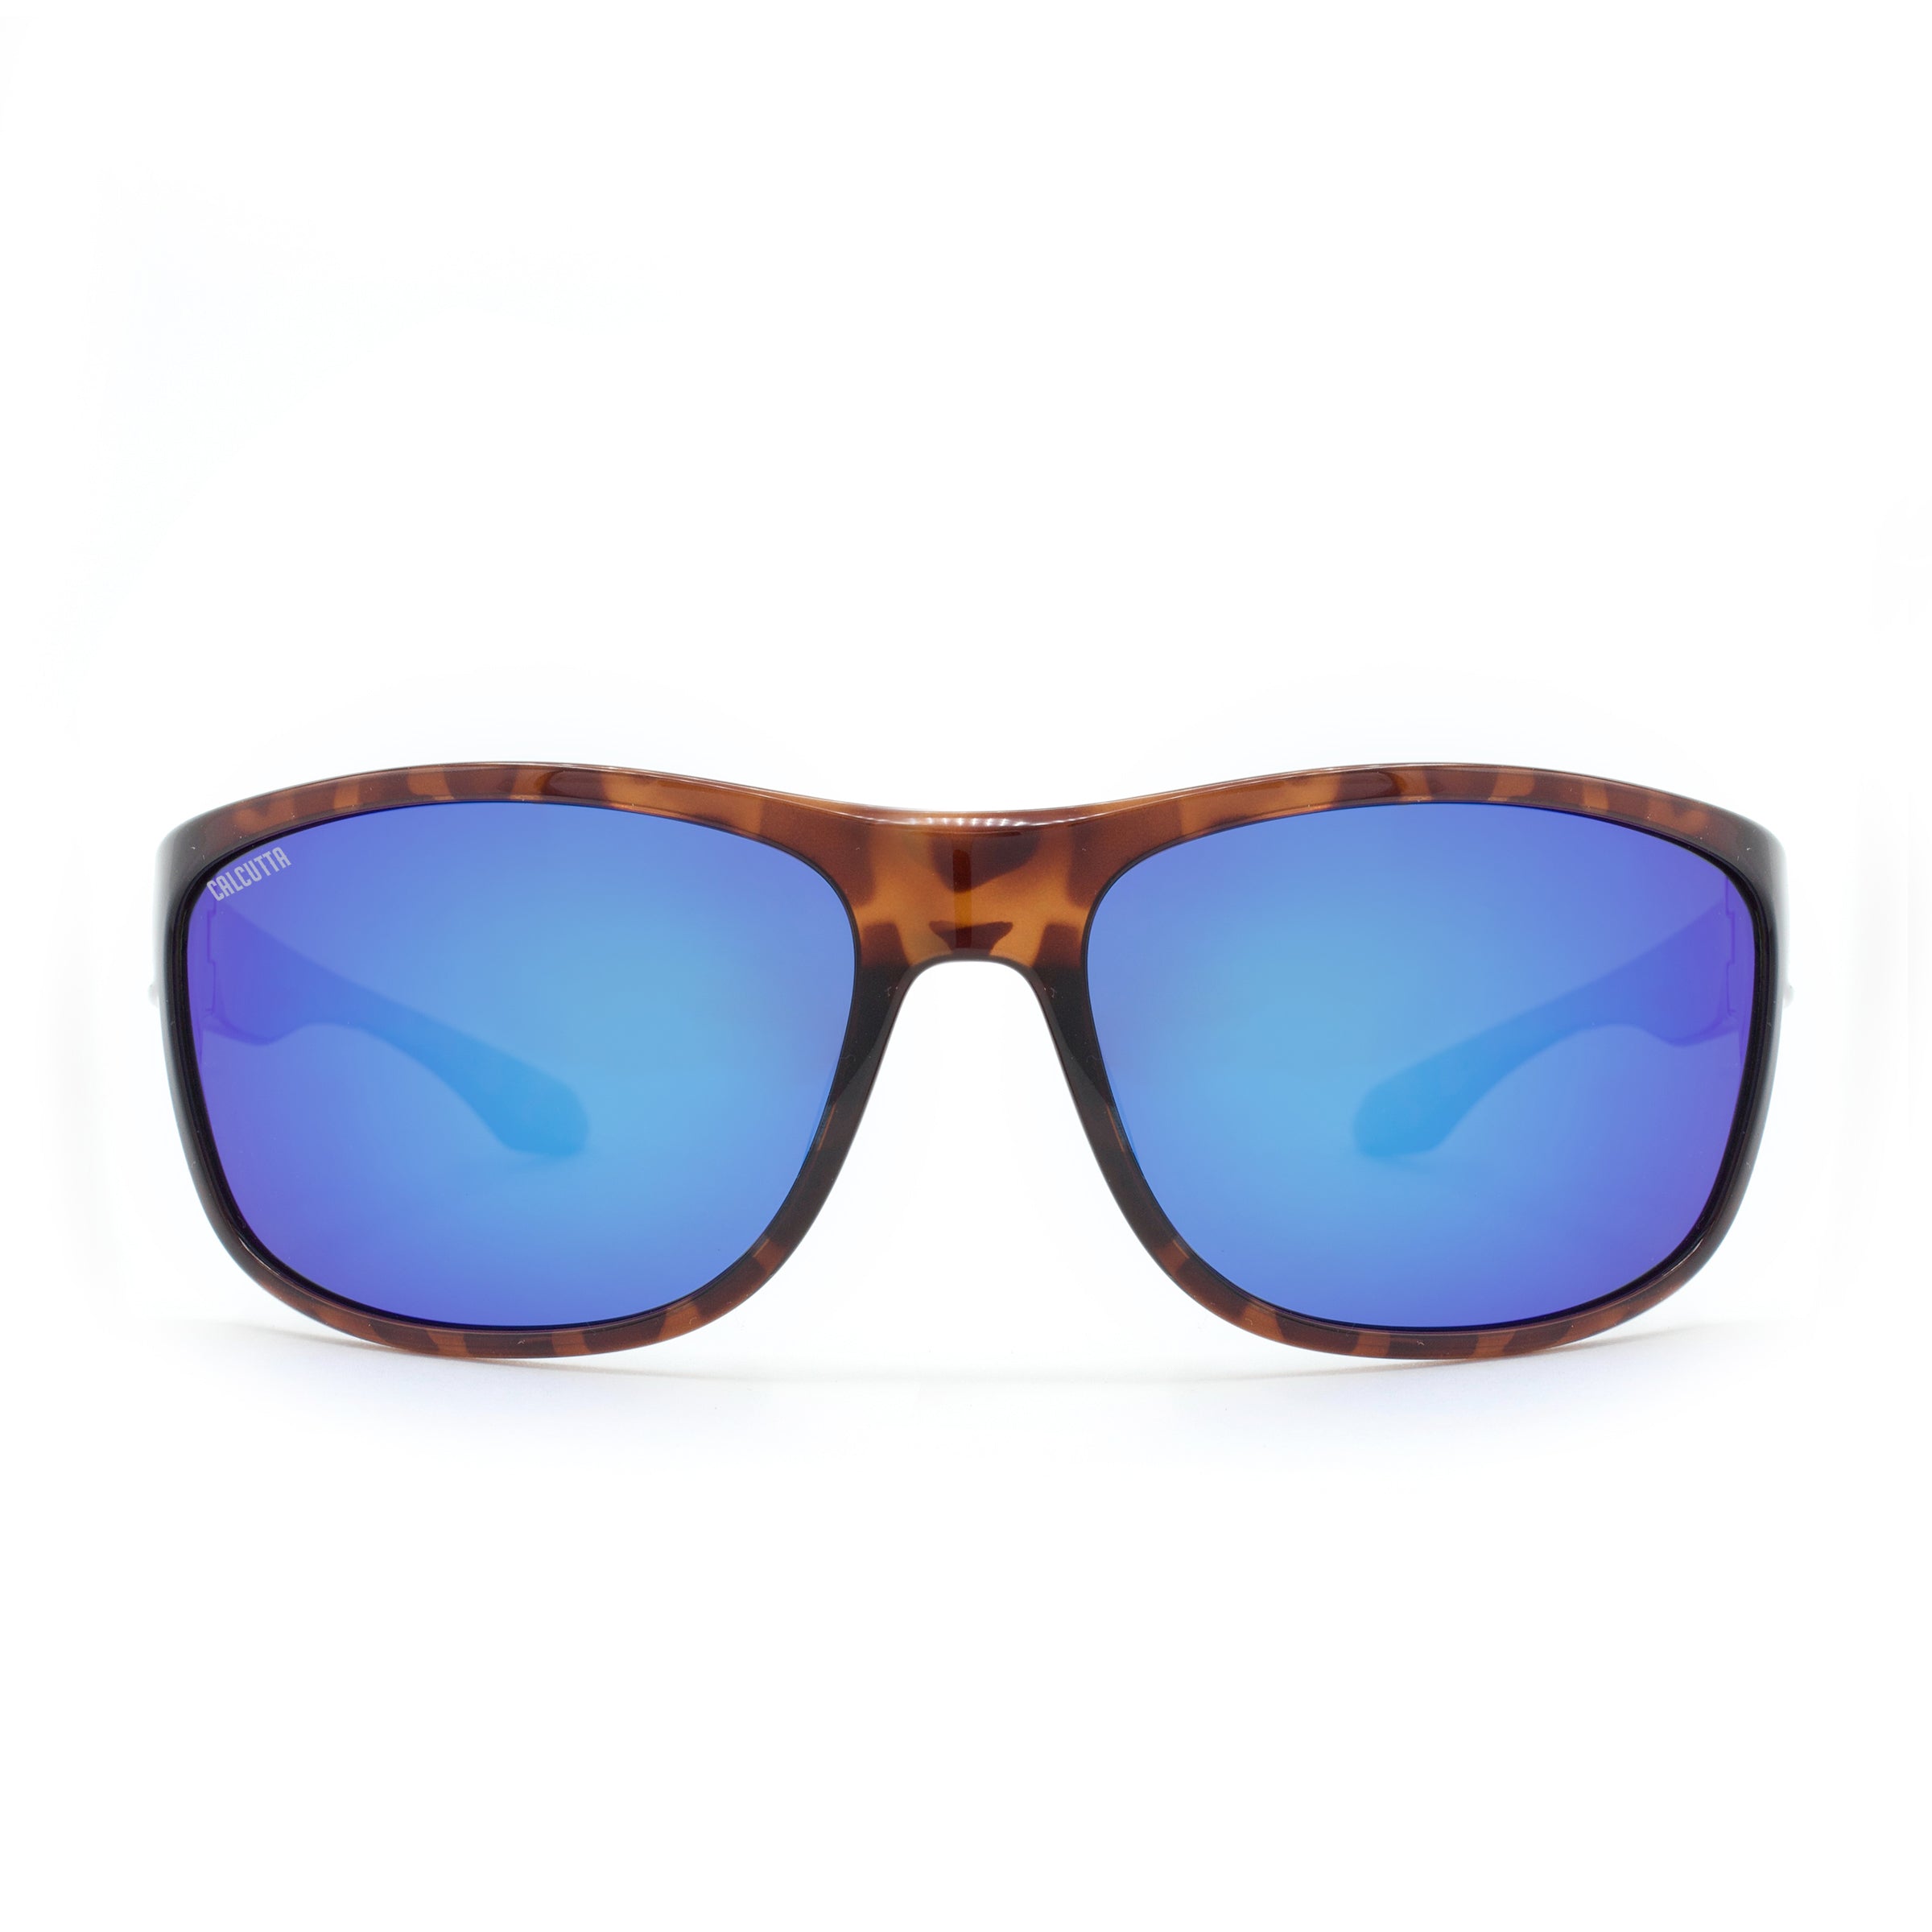 Calcutta Cross sunglasses tortoise frame blue mirror lens front